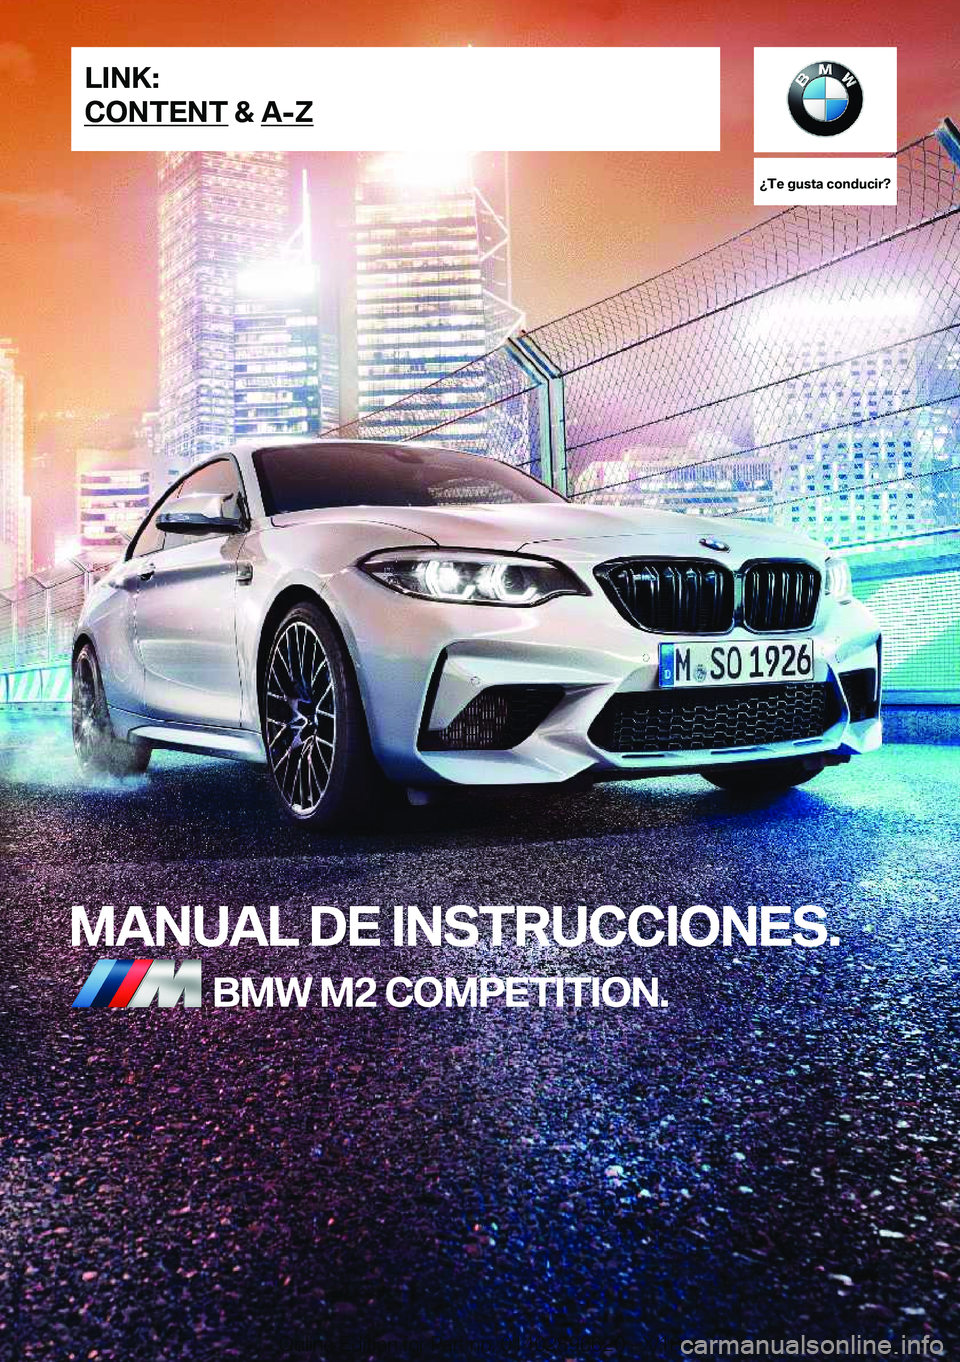 BMW M2 2019  Manuales de Empleo (in Spanish) ��T�e��g�u�s�t�a��c�o�n�d�u�c�i�r� 
�M�A�N�U�A�L��D�E��I�N�S�T�R�U�C�C�I�O�N�E�S�.�B�M�W��M�2��C�O�M�P�E�T�I�T�I�O�N�.�L�I�N�K�:
�C�O�N�T�E�N�T��&��A�-�;�O�n�l�i�n�e��E�d�i�t�i�o�n��f�o�r�